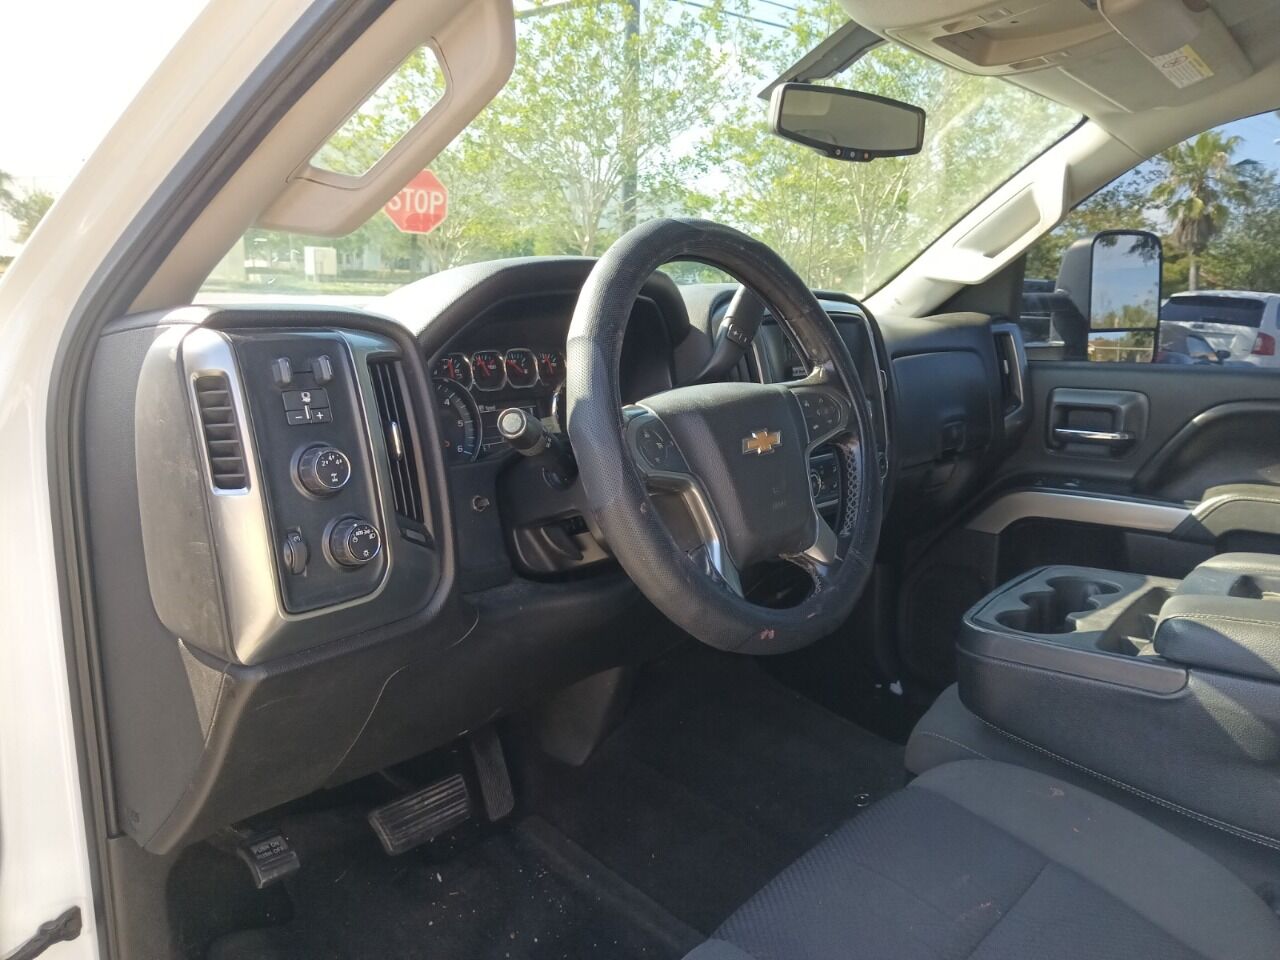 2015 Chevrolet Silverado Pickup - $15,950